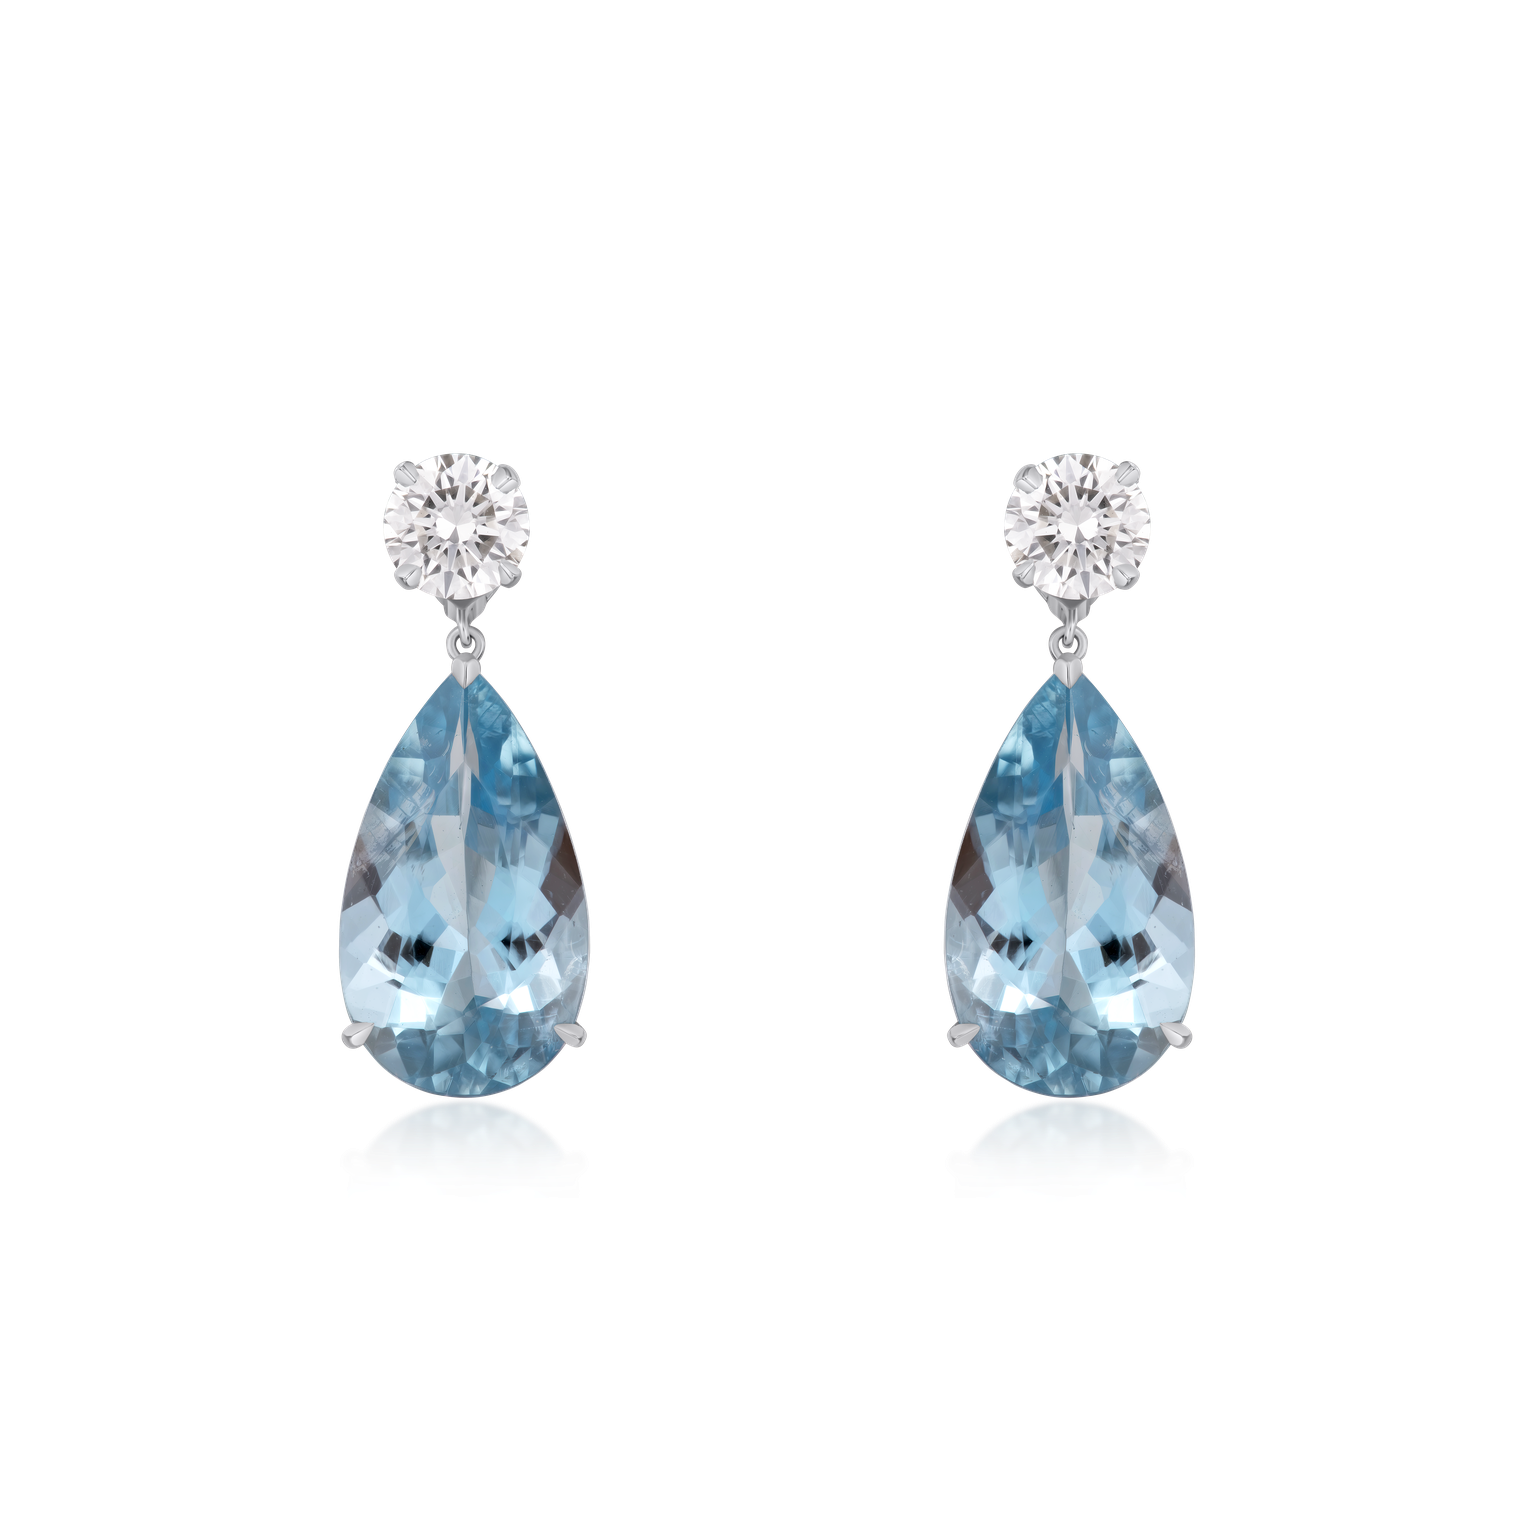 7.97cts Aquamarine and Diamond Drop Earrings